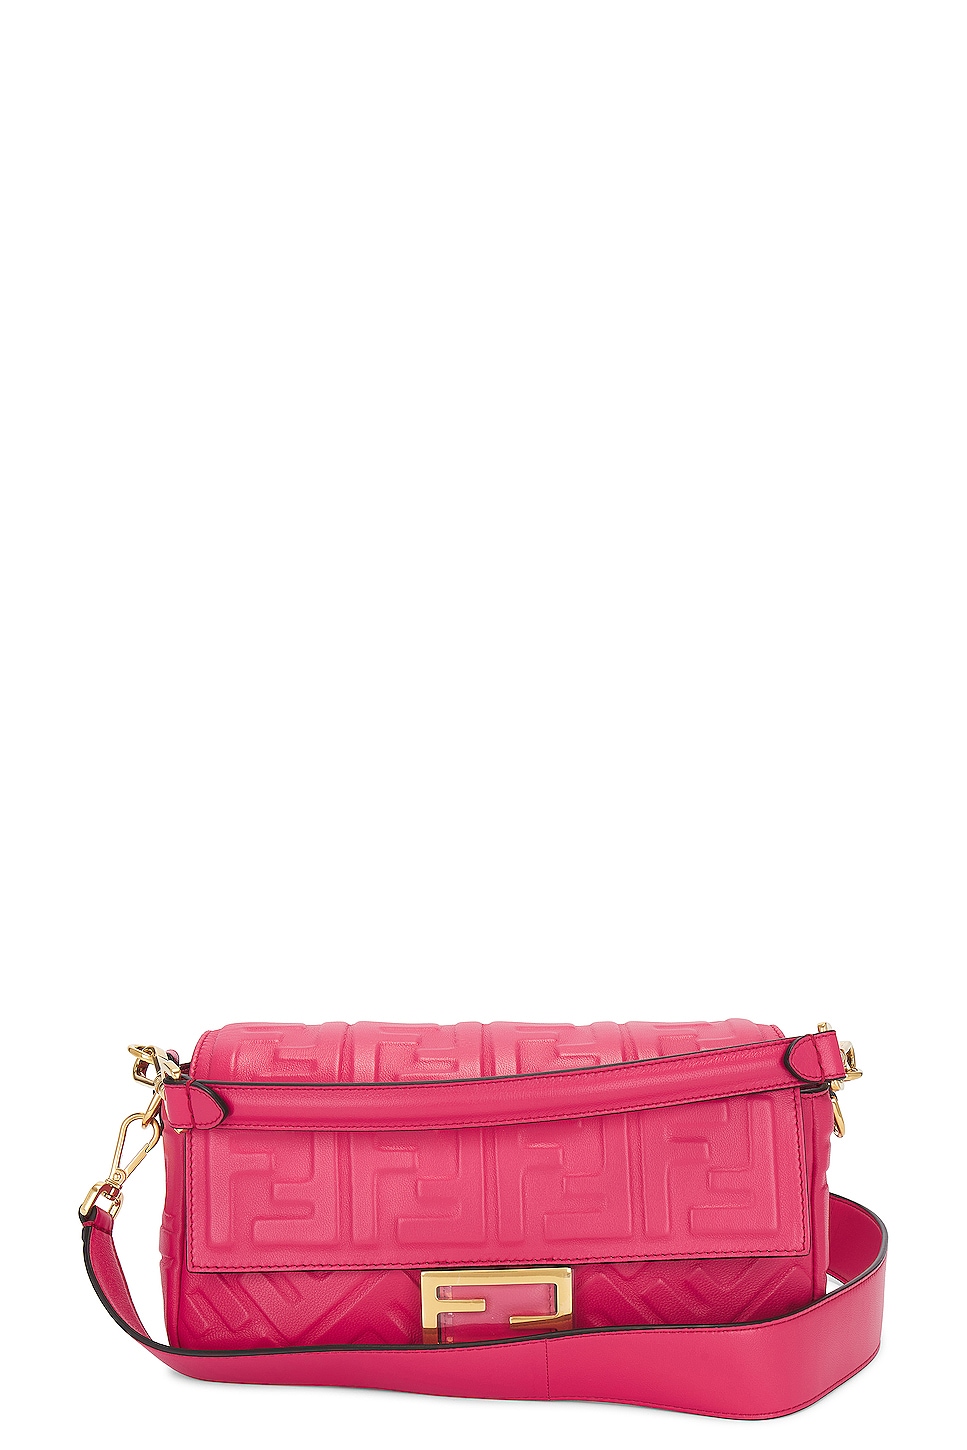 Fendi Mama Baguette Shoulder Bag in Pink